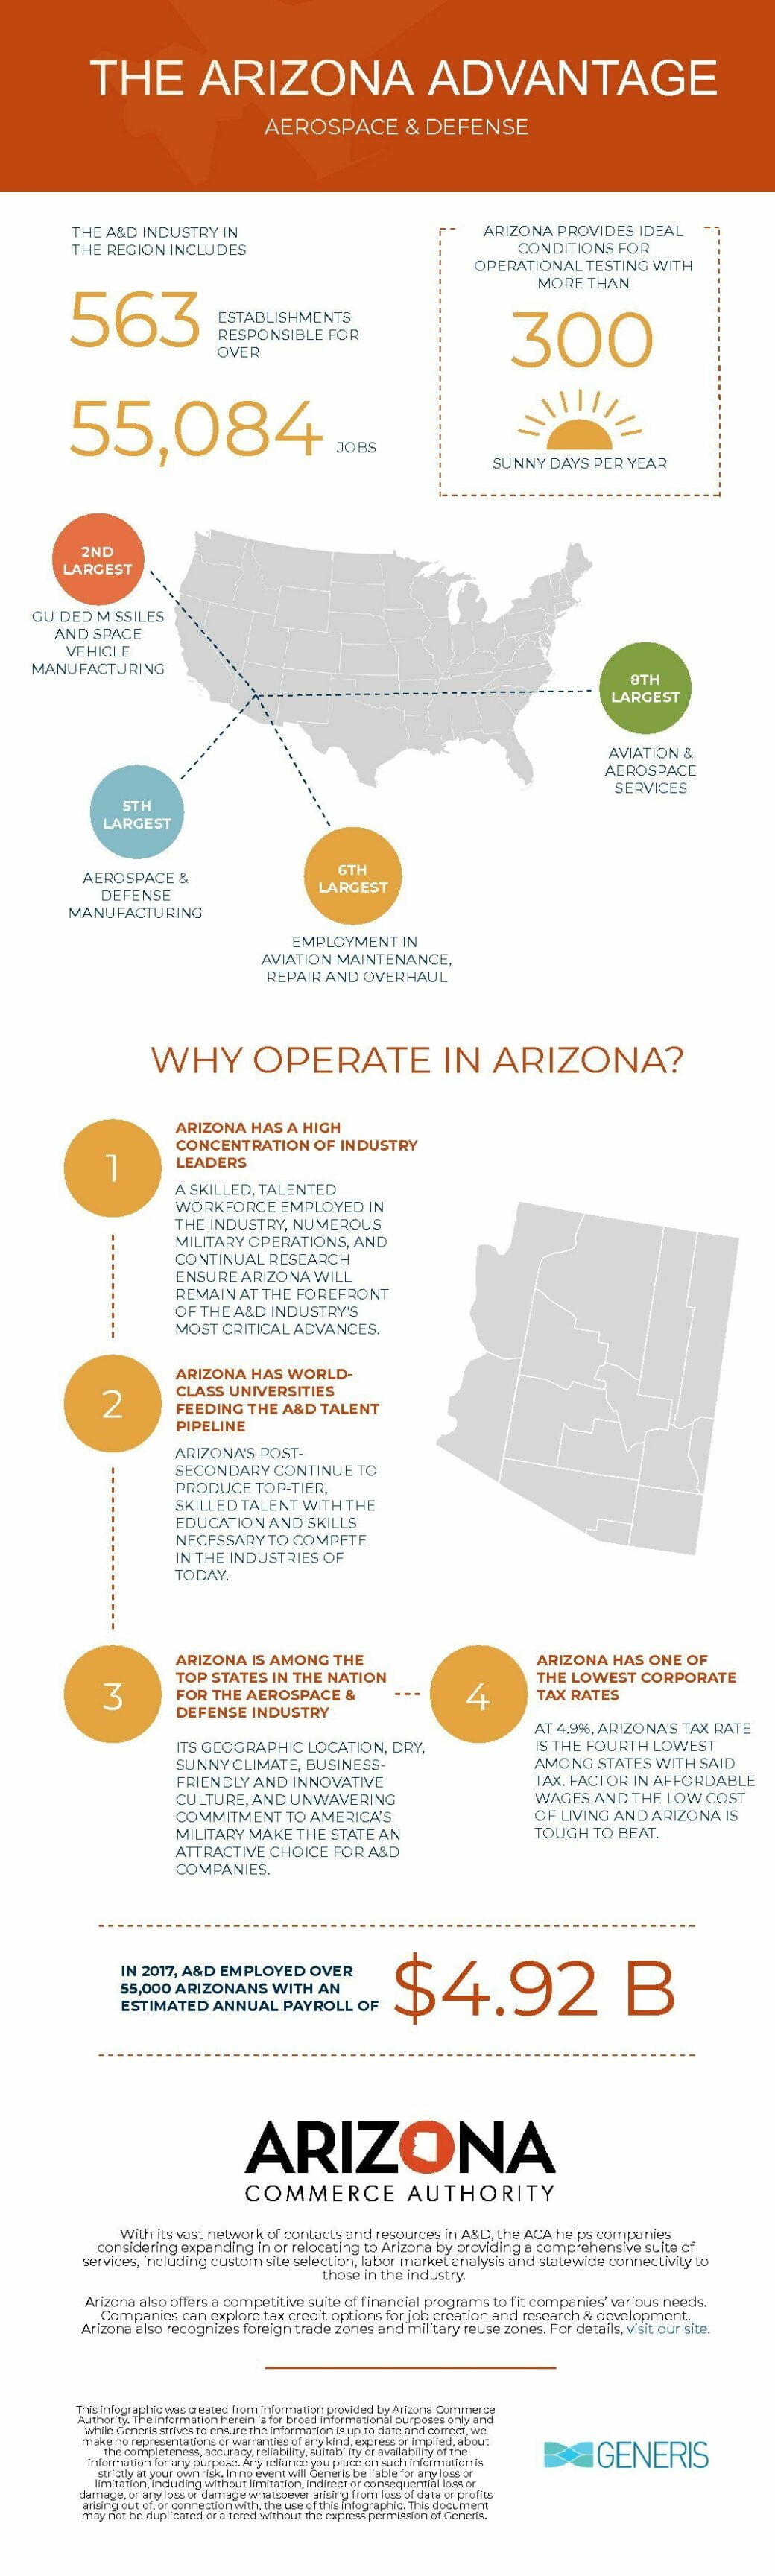 Arizona-Commerce-Authority-infographic-v3-1-1-1-pdf